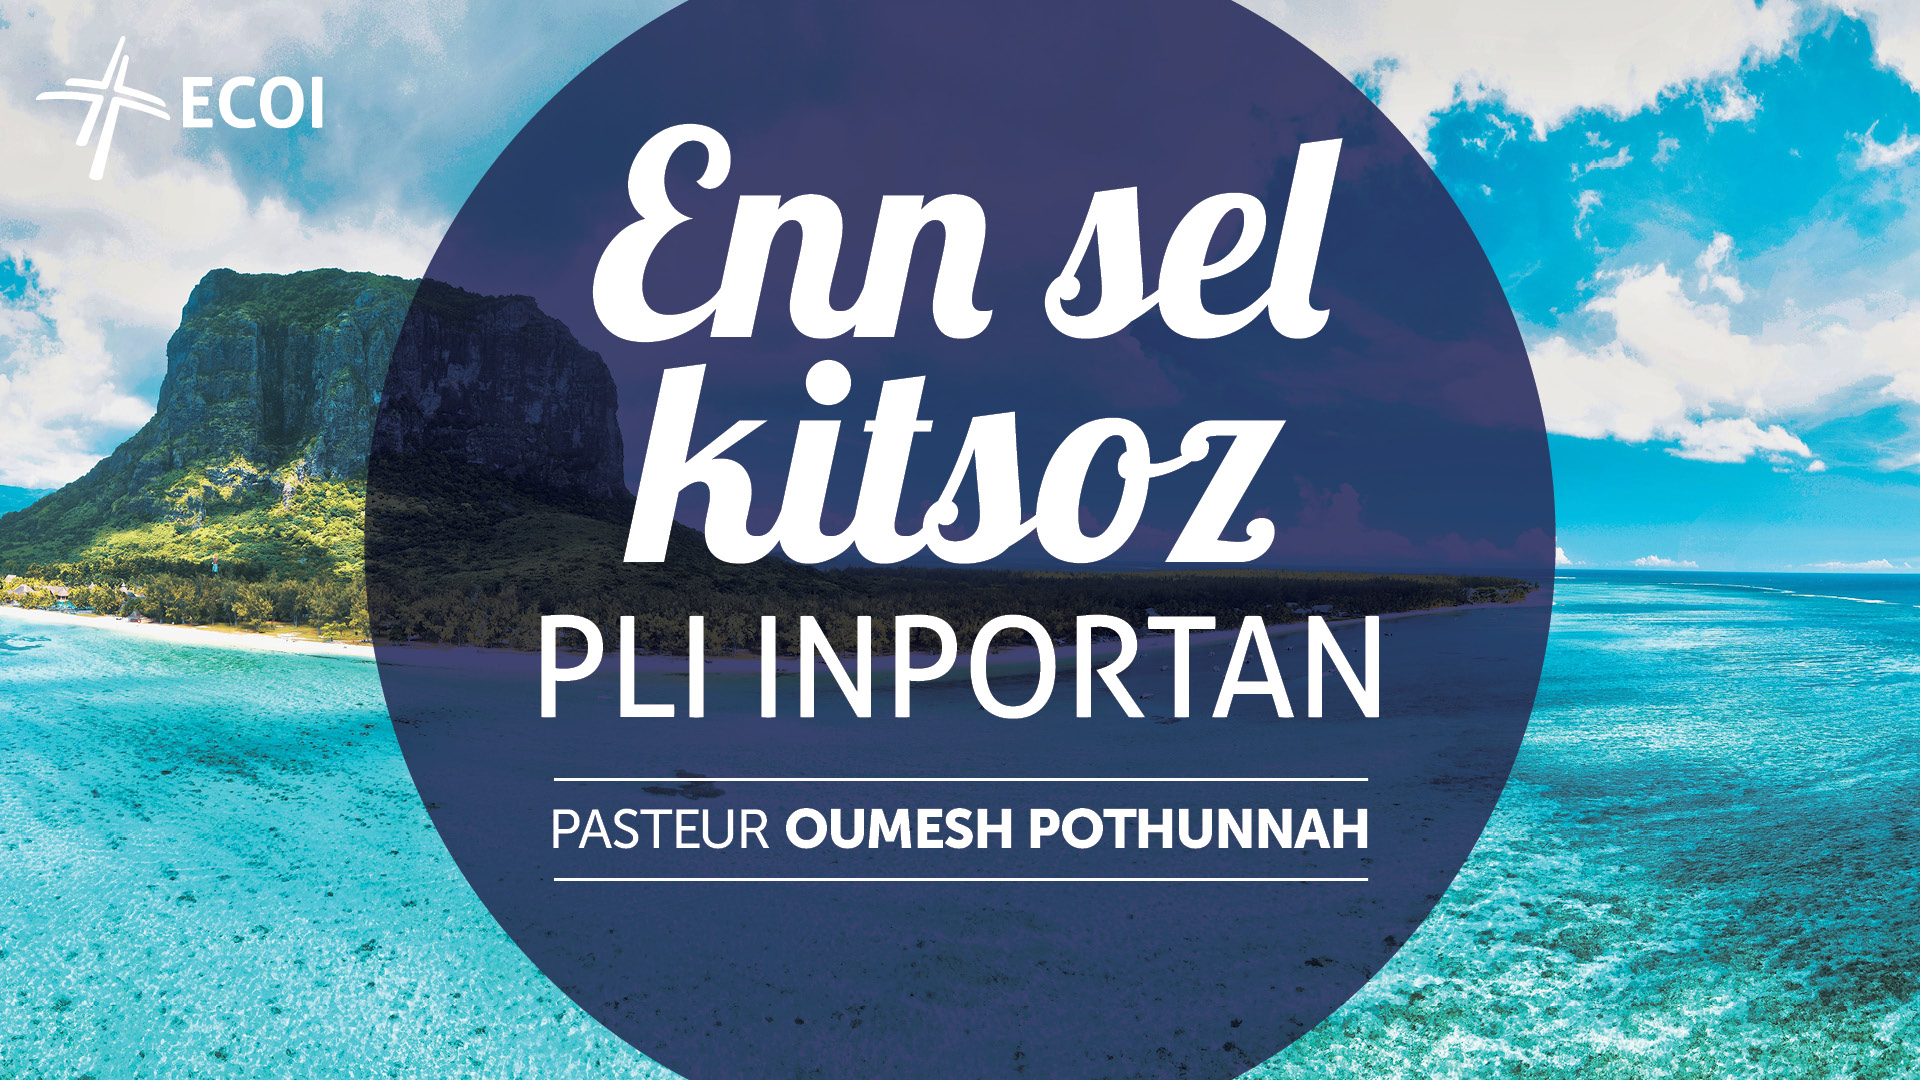 Featured image for “Enn sel kitsoz pli inportan”